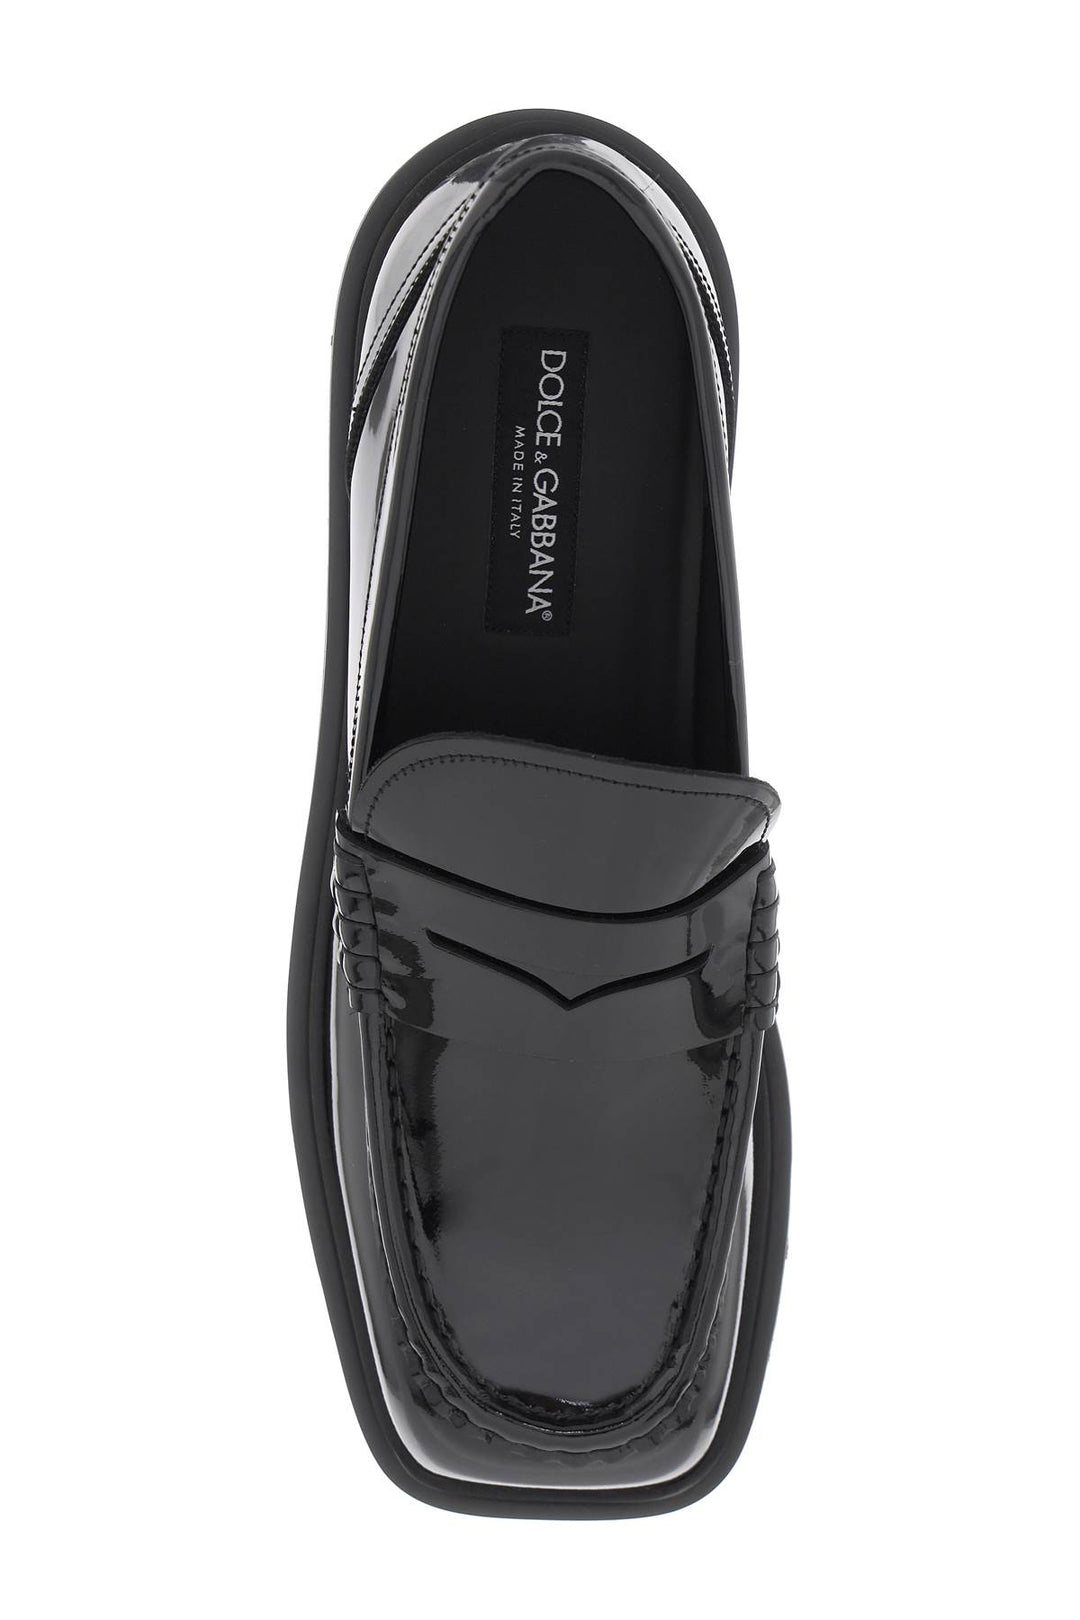 Dolce & Gabbana Patent Leather Mocassins   Nero